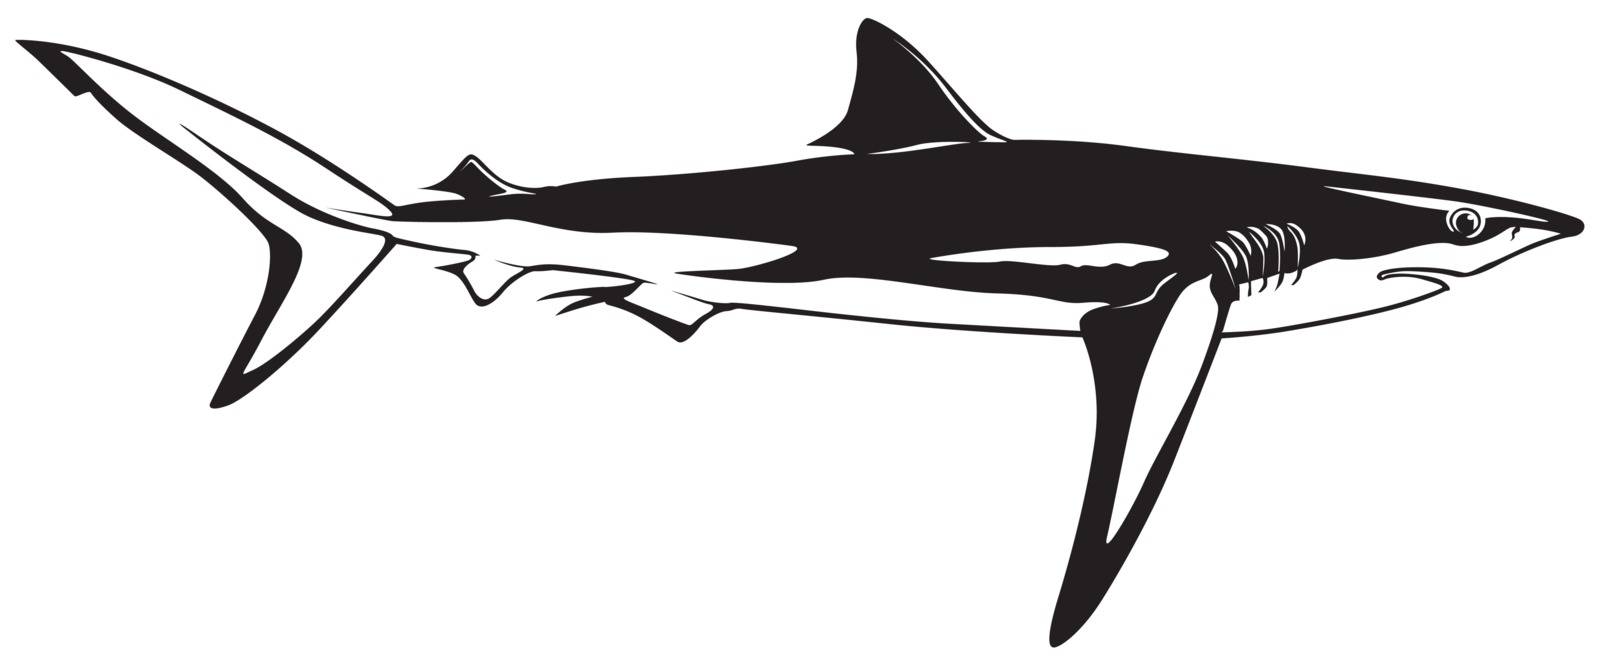 Shark by illustratorCZ